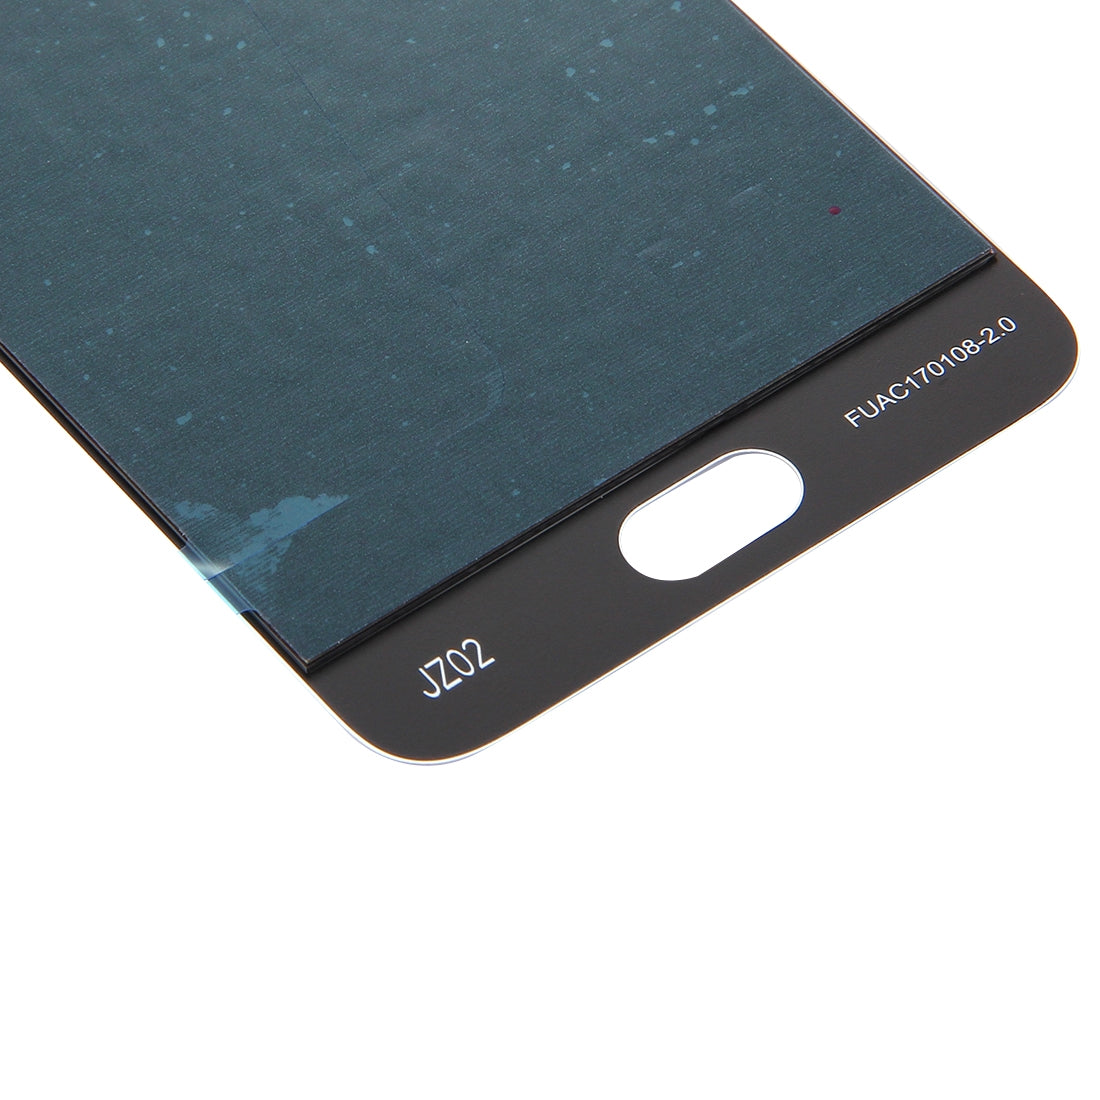 LCD Screen + Touch Digitizer Meizu Pro 6S White